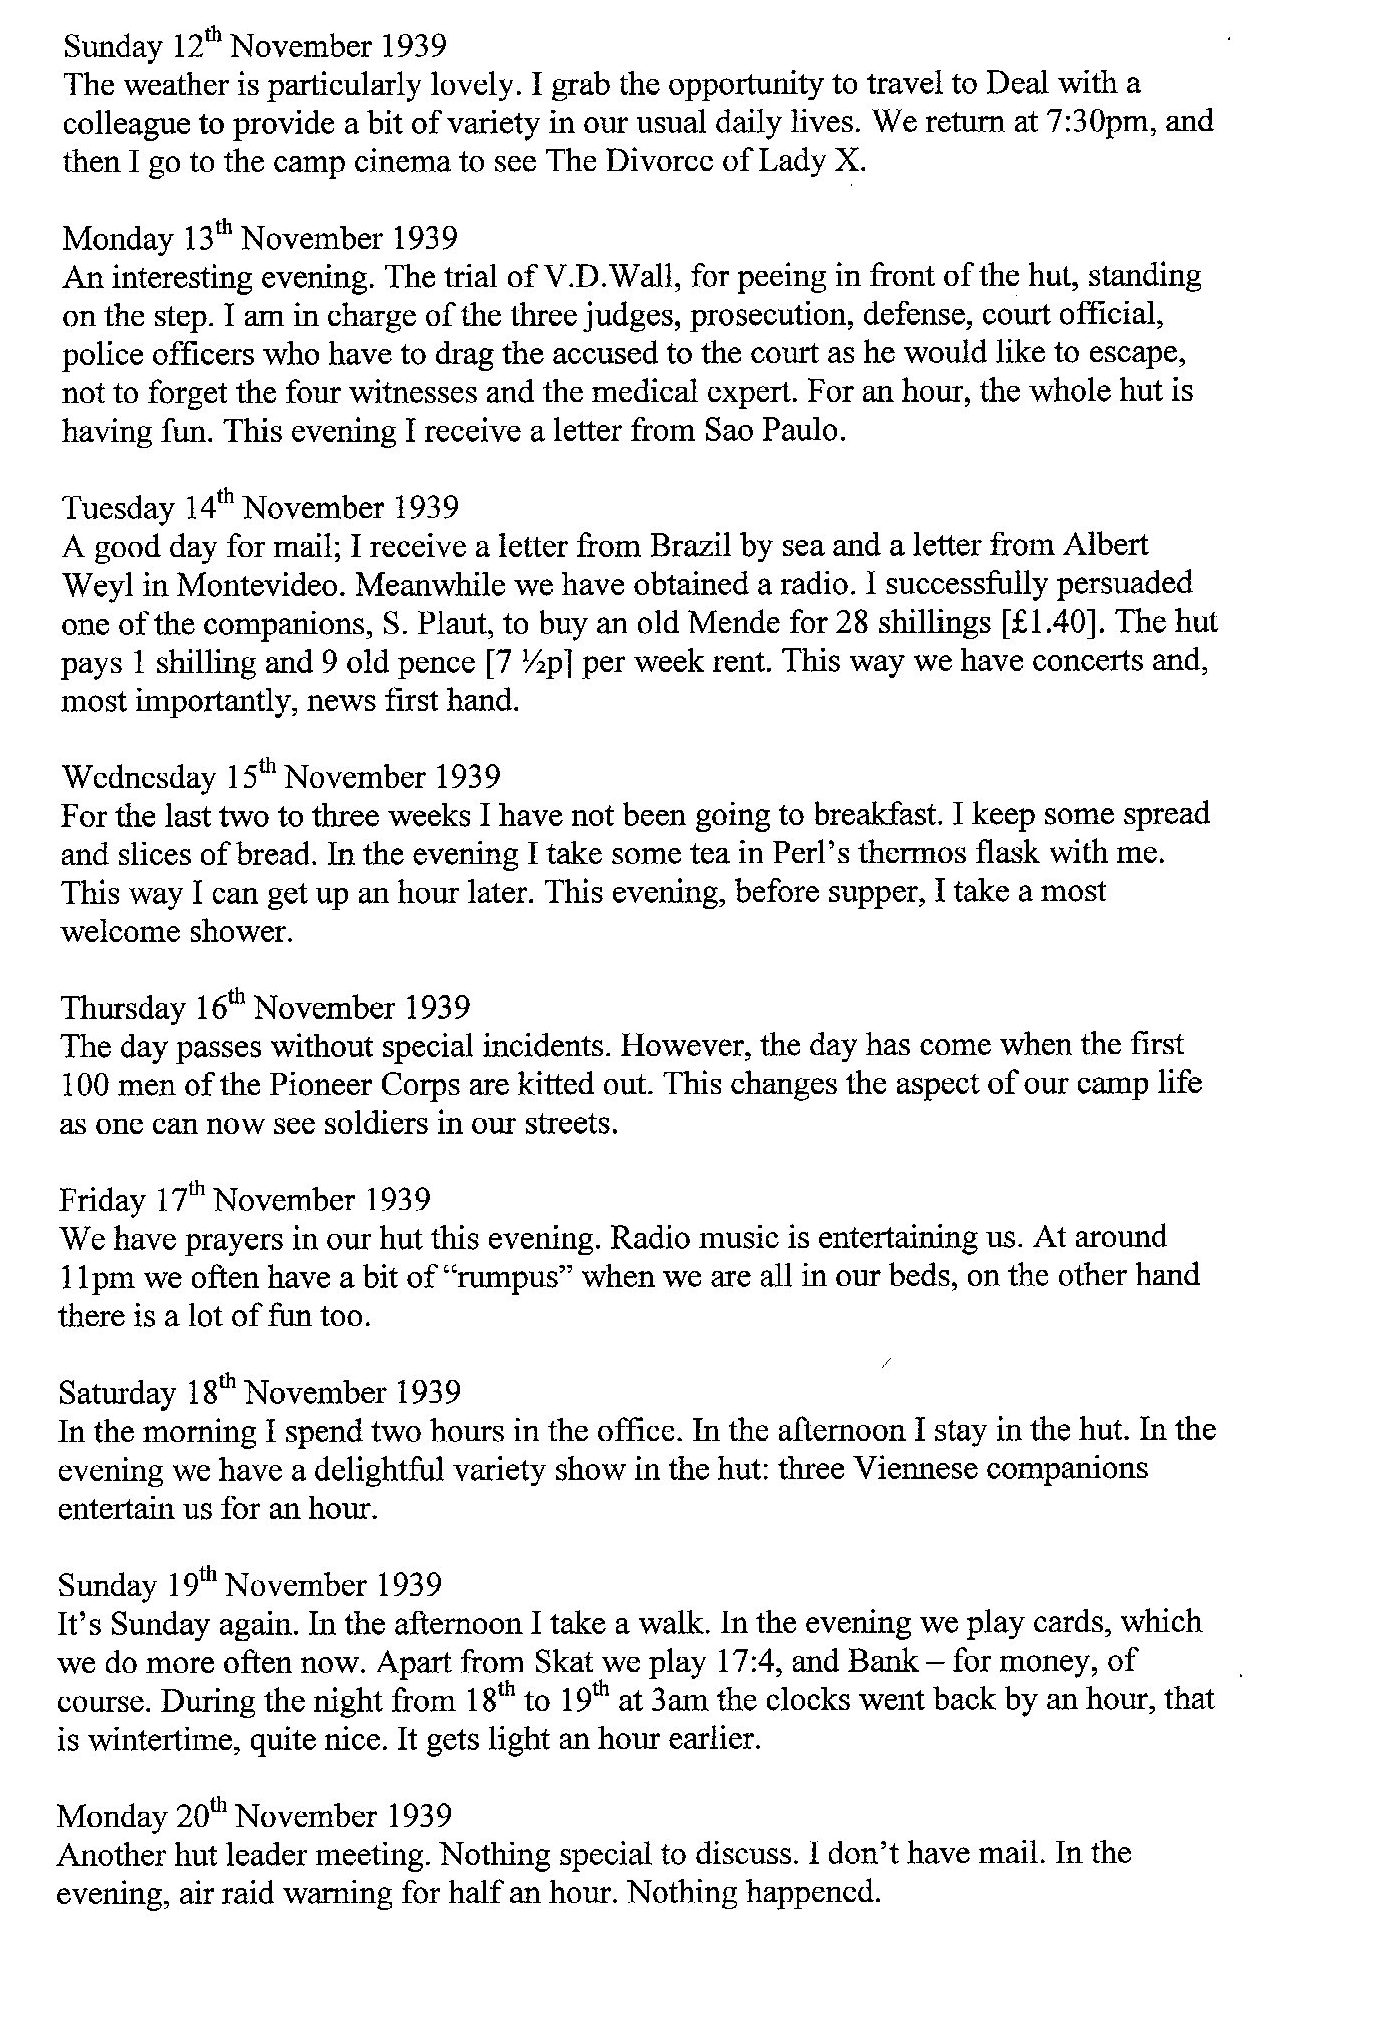 Lothar Nelken, Kitchener Camp diary, 1939 to 1940, page 15, 12 November to 20 November 1939